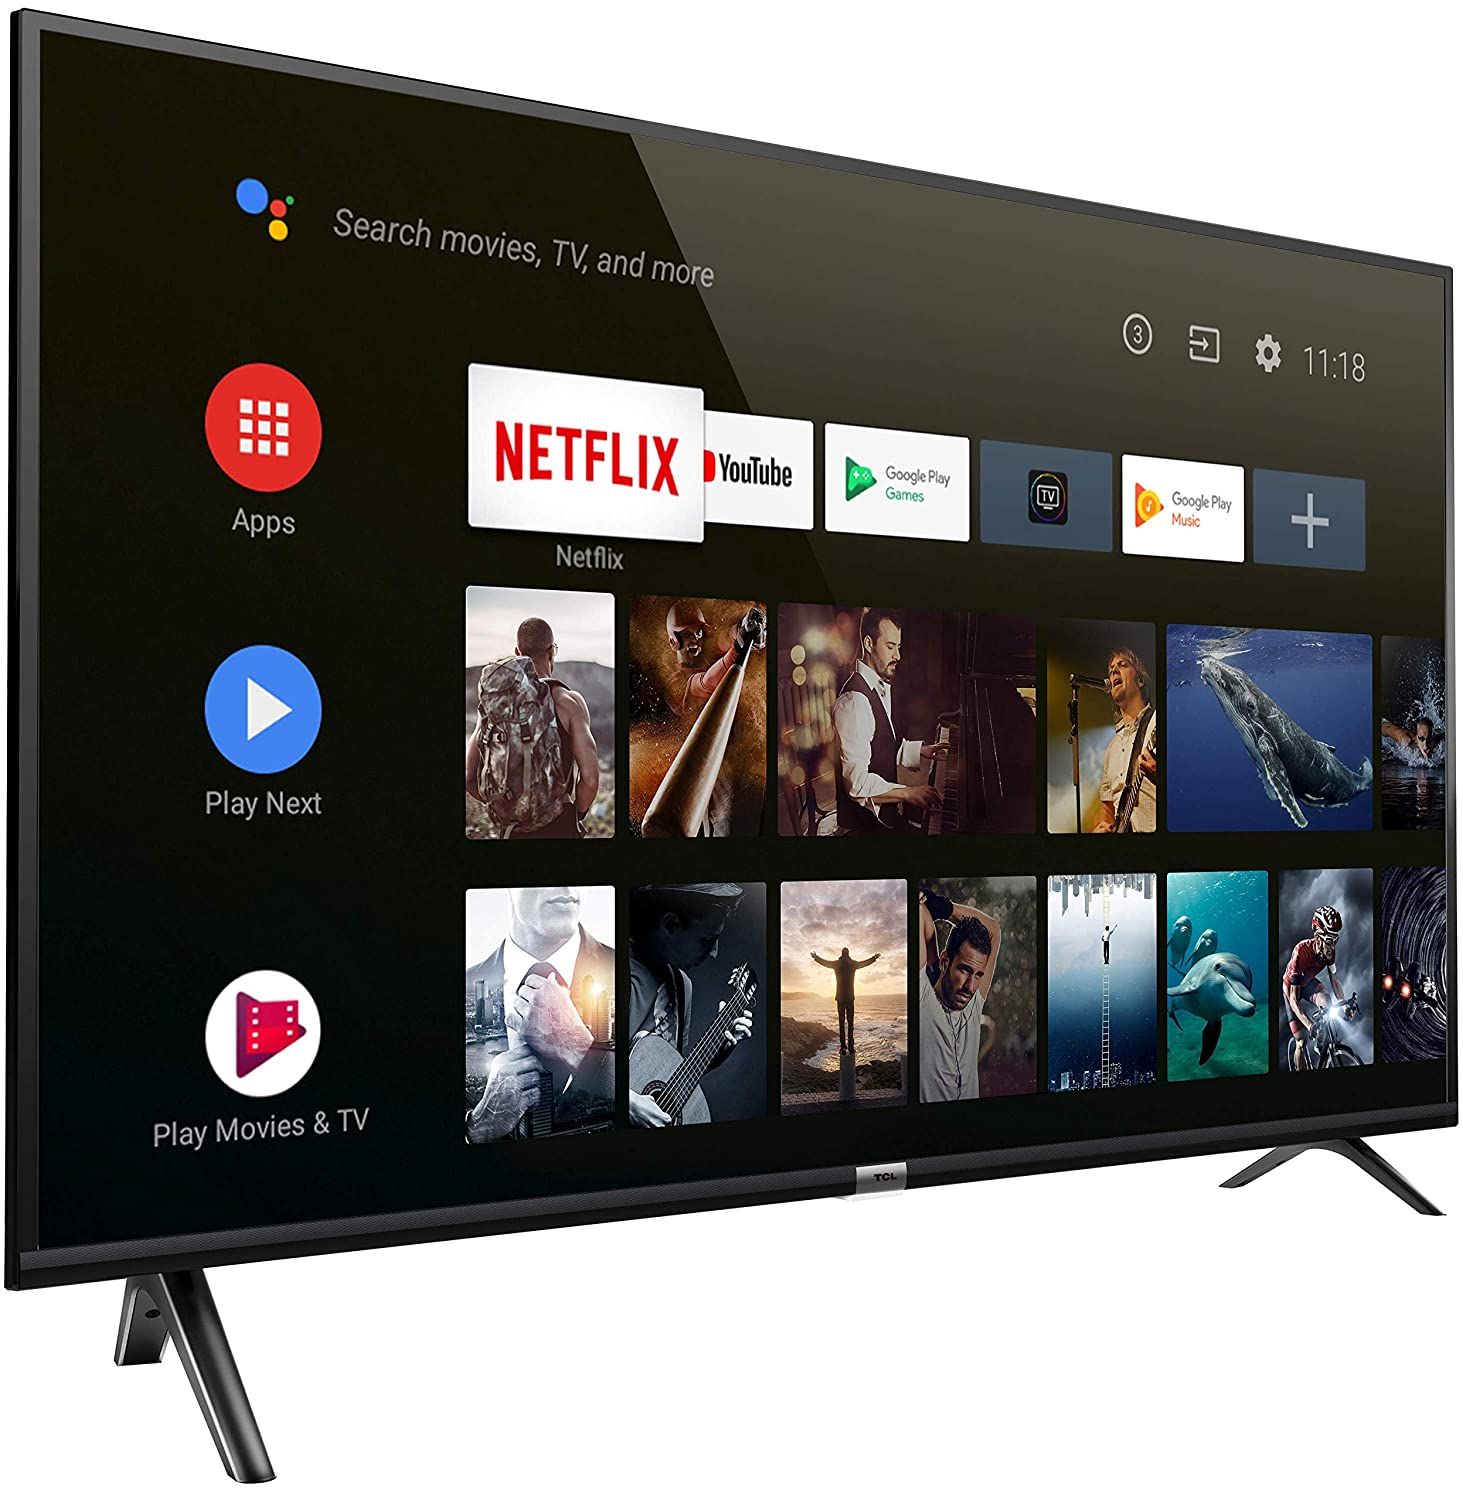 Netflix Login Error On Samsung Smart TV